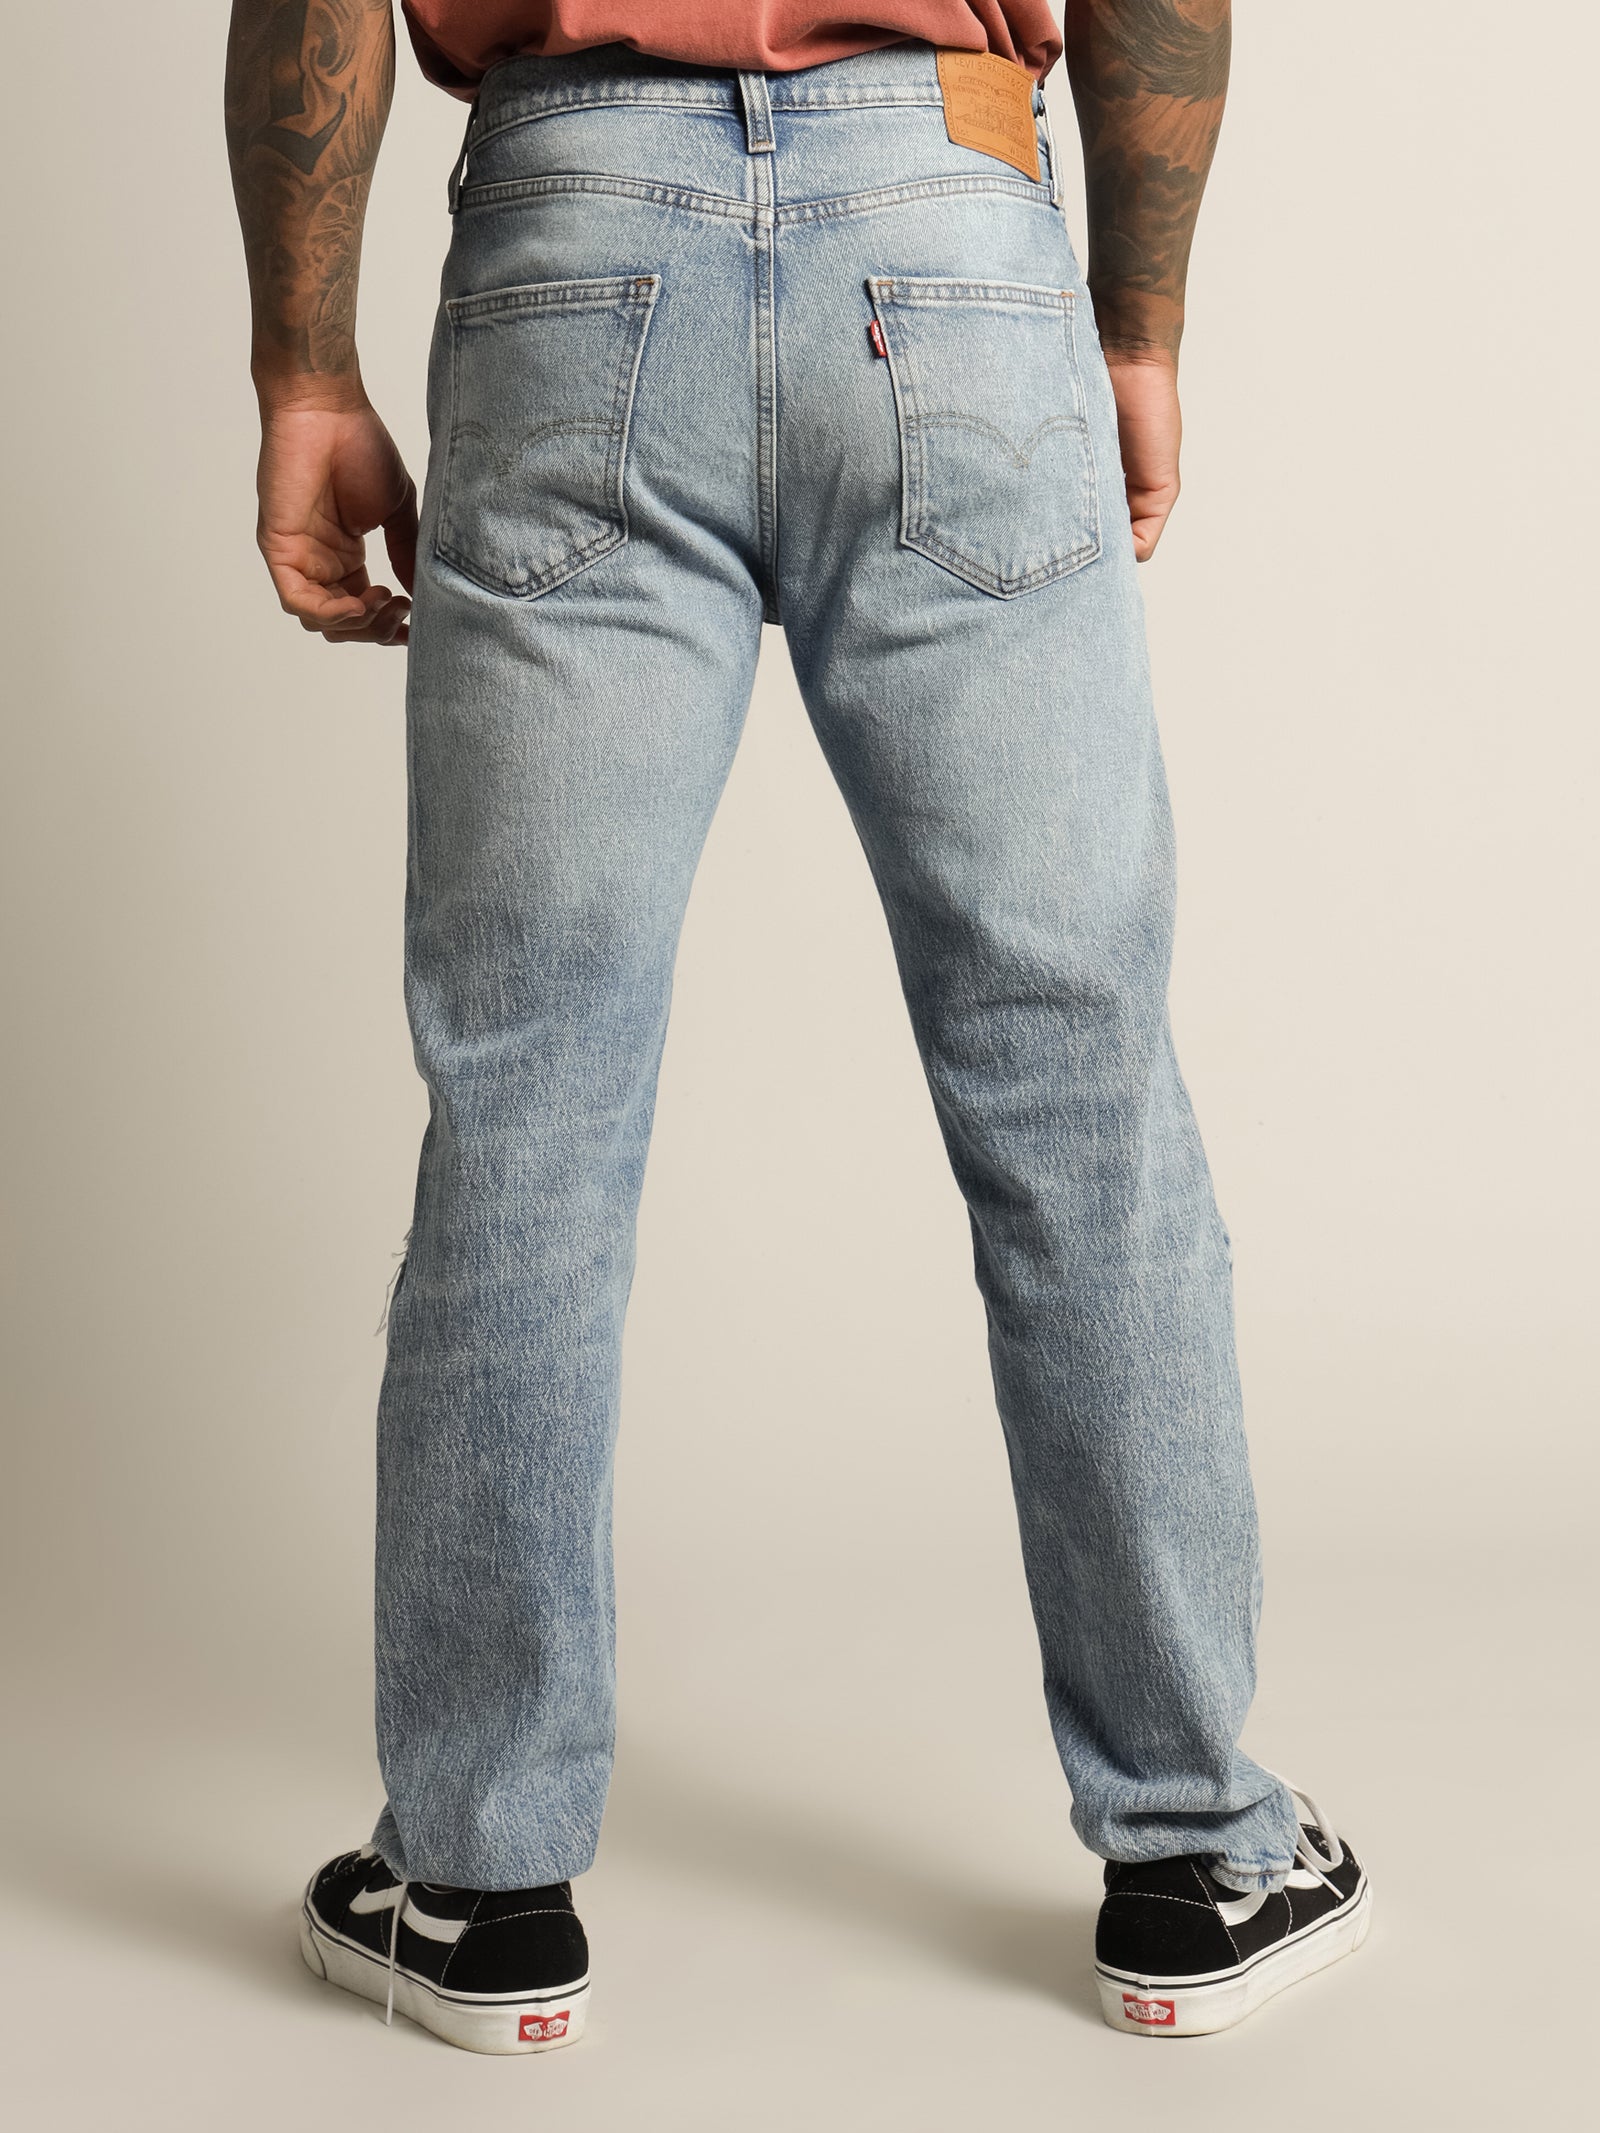 So High Slim Fit Jeans in California Star DX - Glue Store